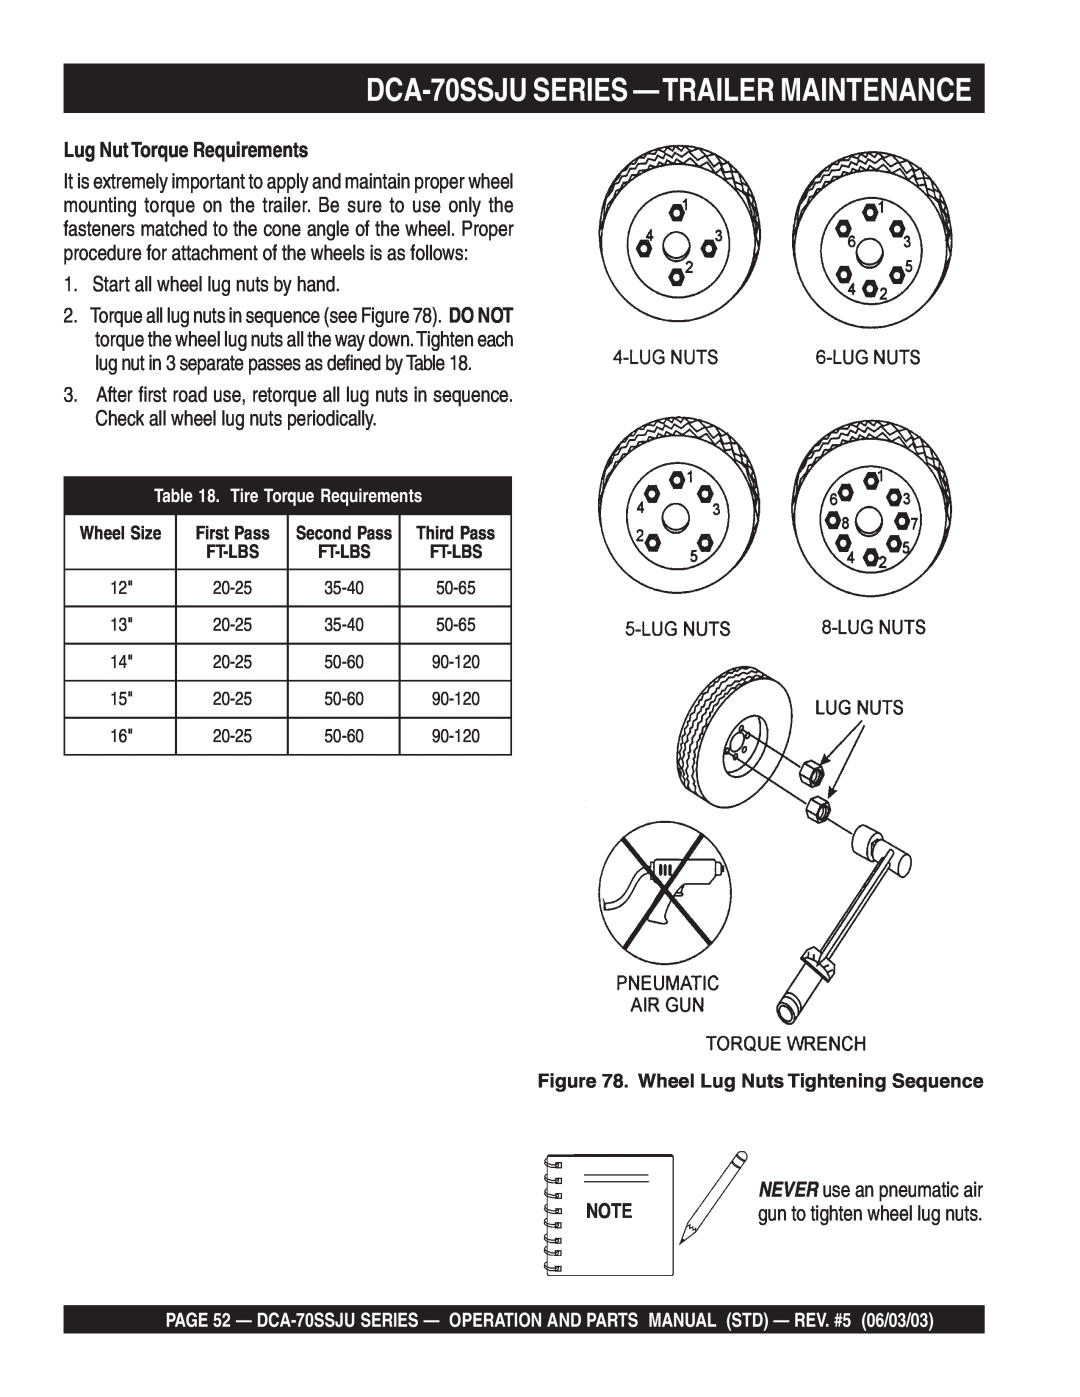 Multiquip DCA-70SSJUSERIES —TRAILERMAINTENANCE, Lug Nut Torque Requirements, Wheel Lug Nuts Tightening Sequence 